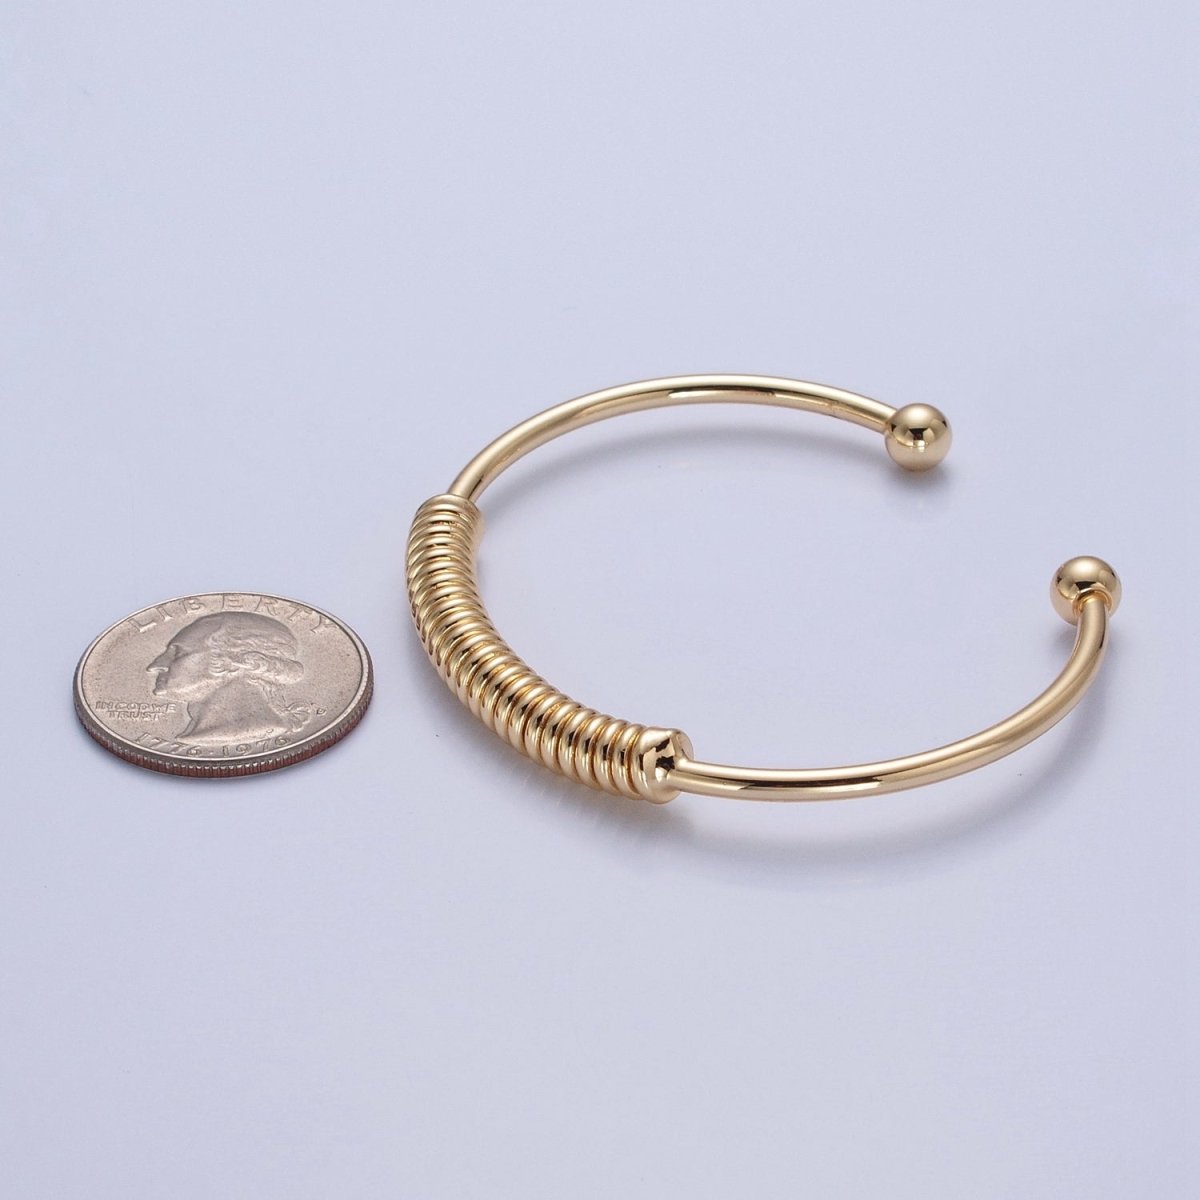 Minimalist 24K Gold Filled Spiral Bangle Bracelet in Gold & Silver | WA-984 WA-985 Clearance Pricing - DLUXCA